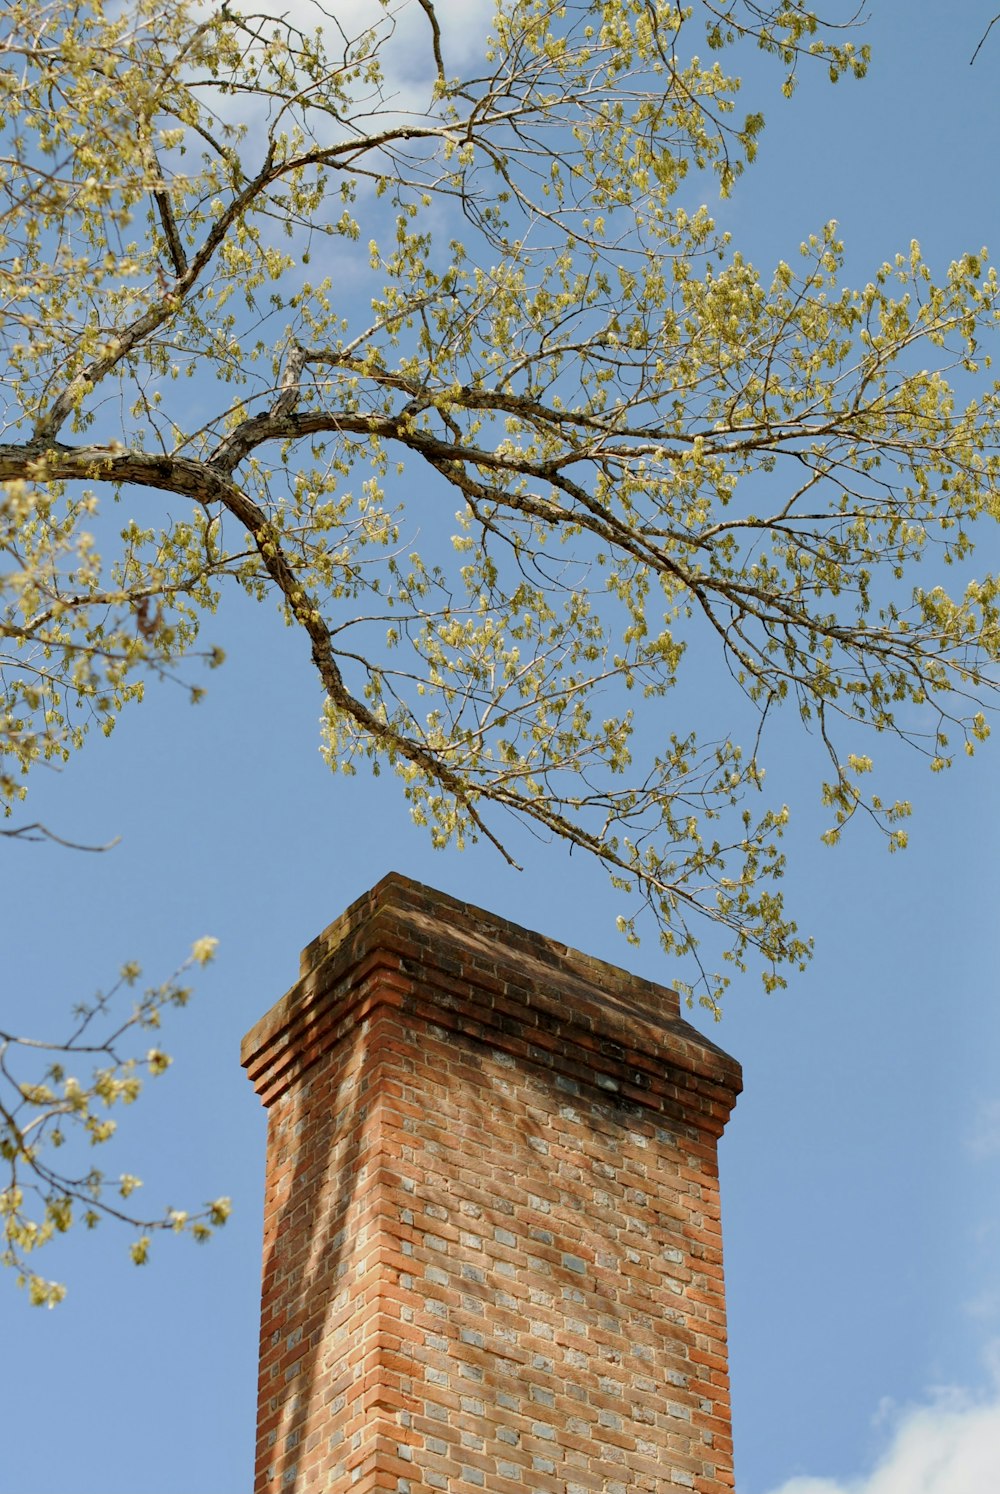 a brick chimney under a tree